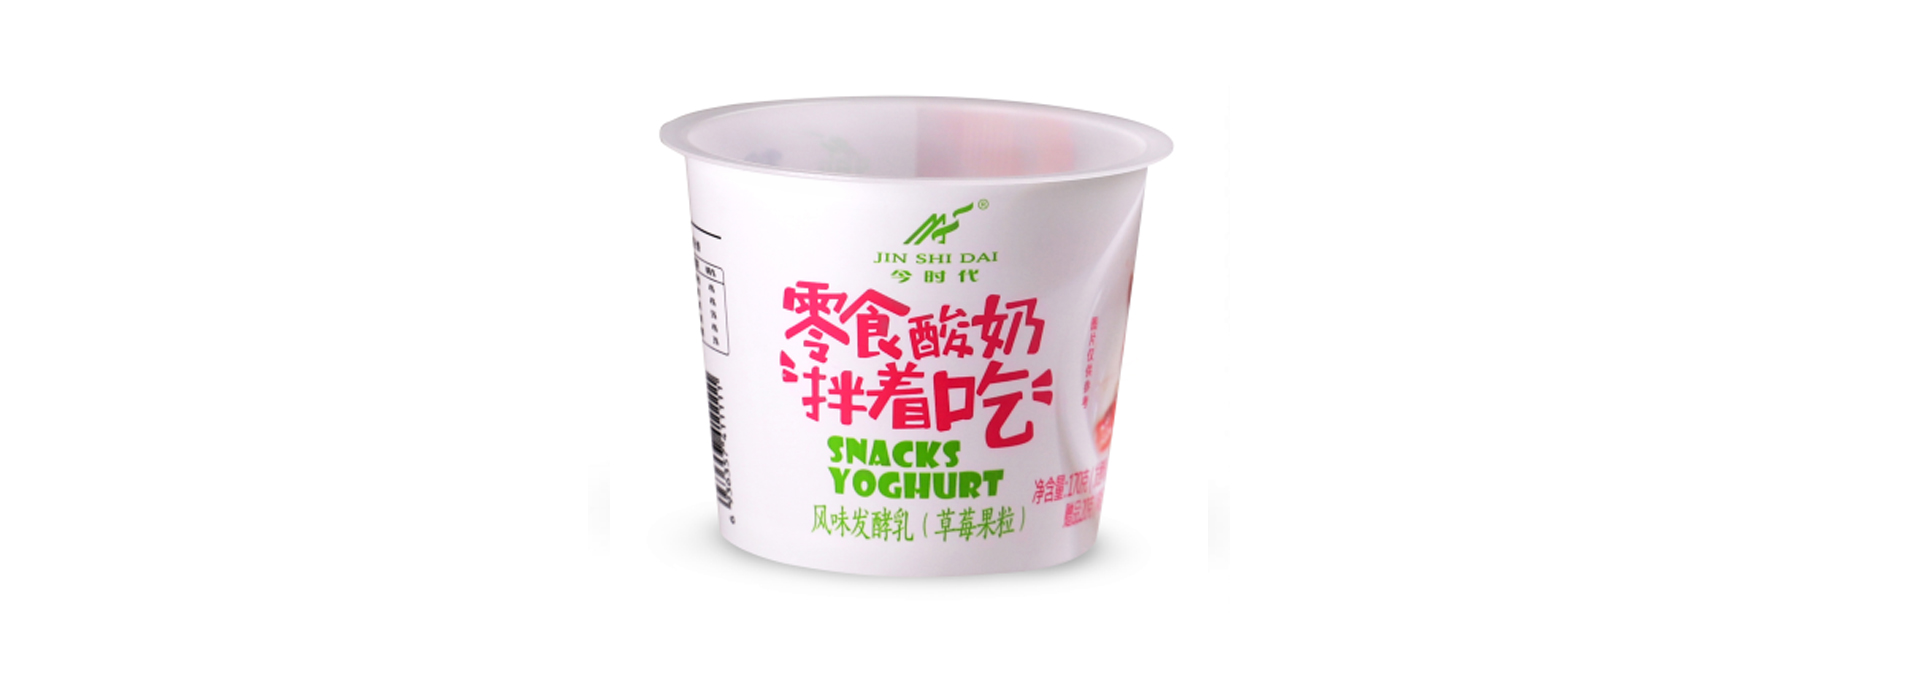 170g yogurt cup (94 caliber)